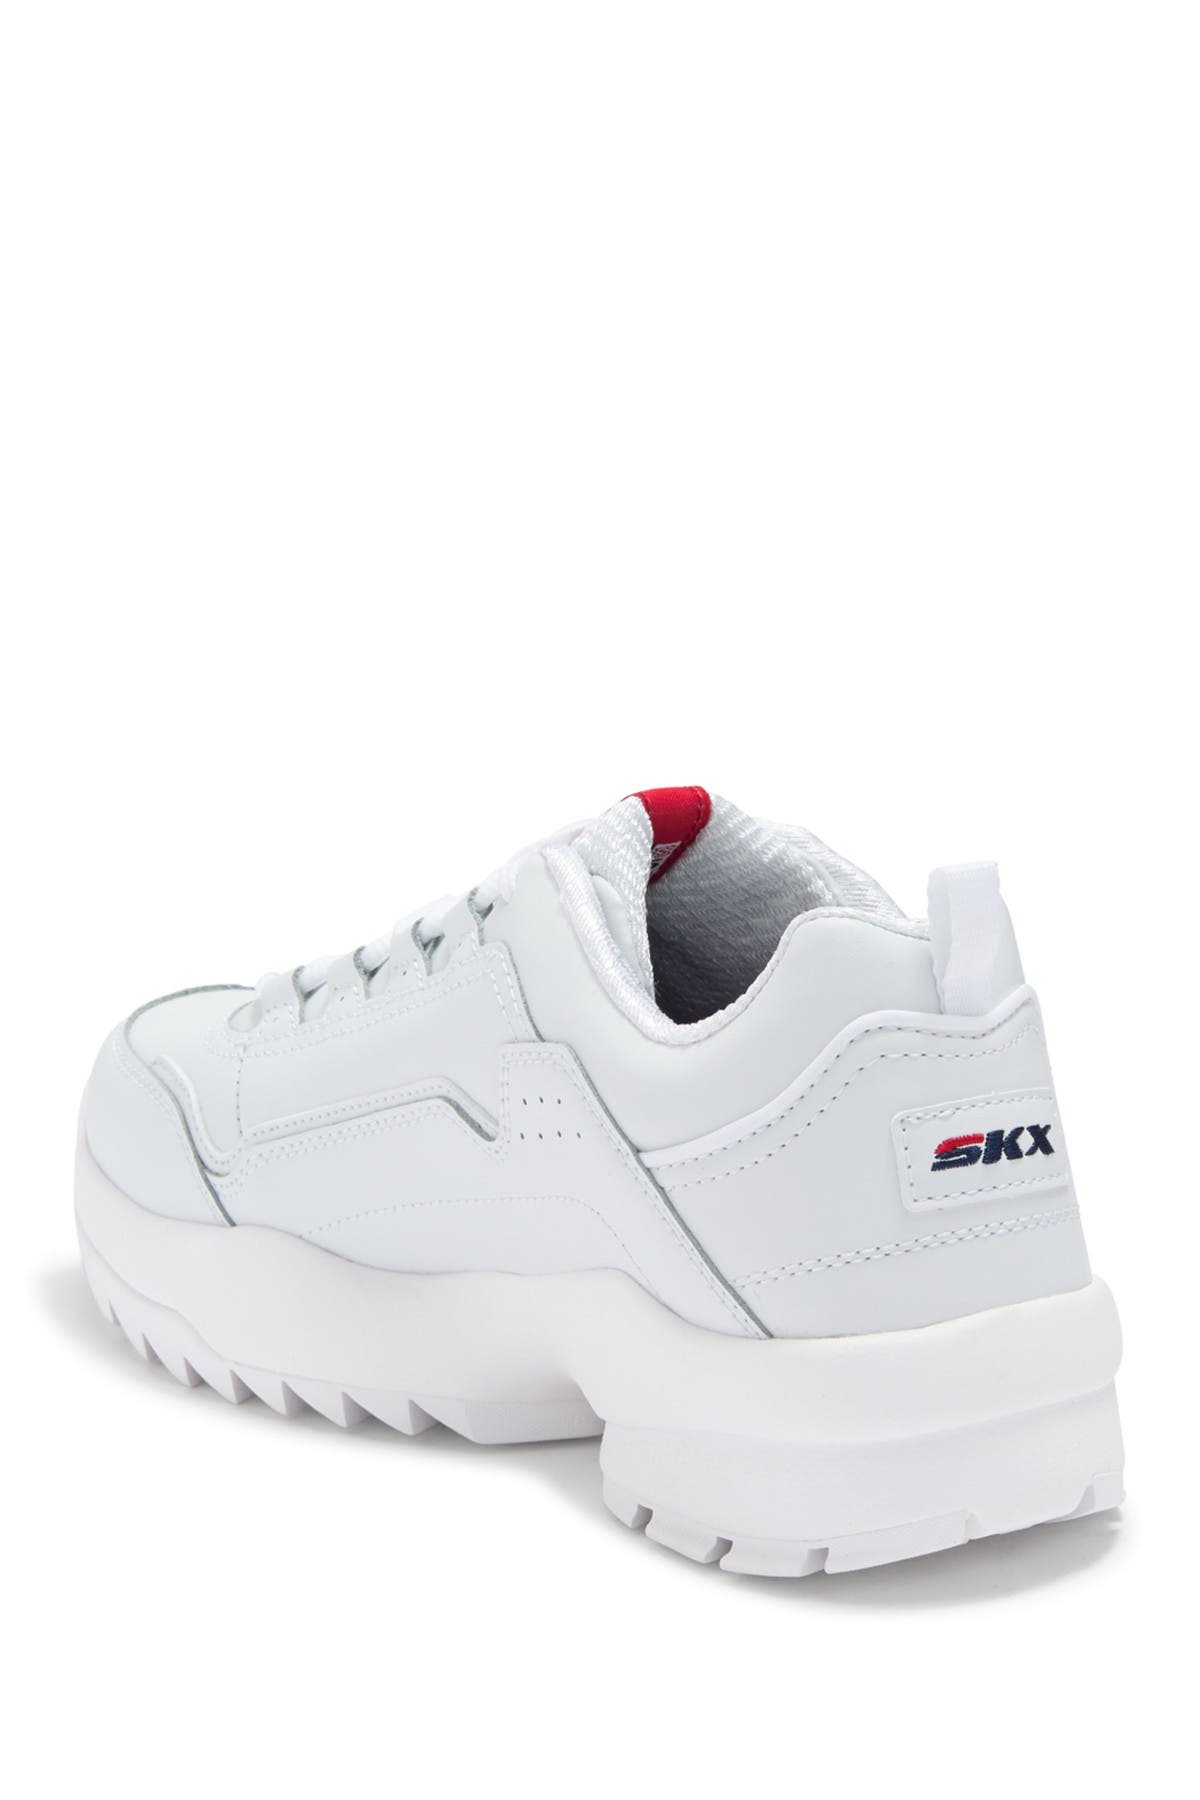 Skechers | Tidao SKX Sport Sneaker 